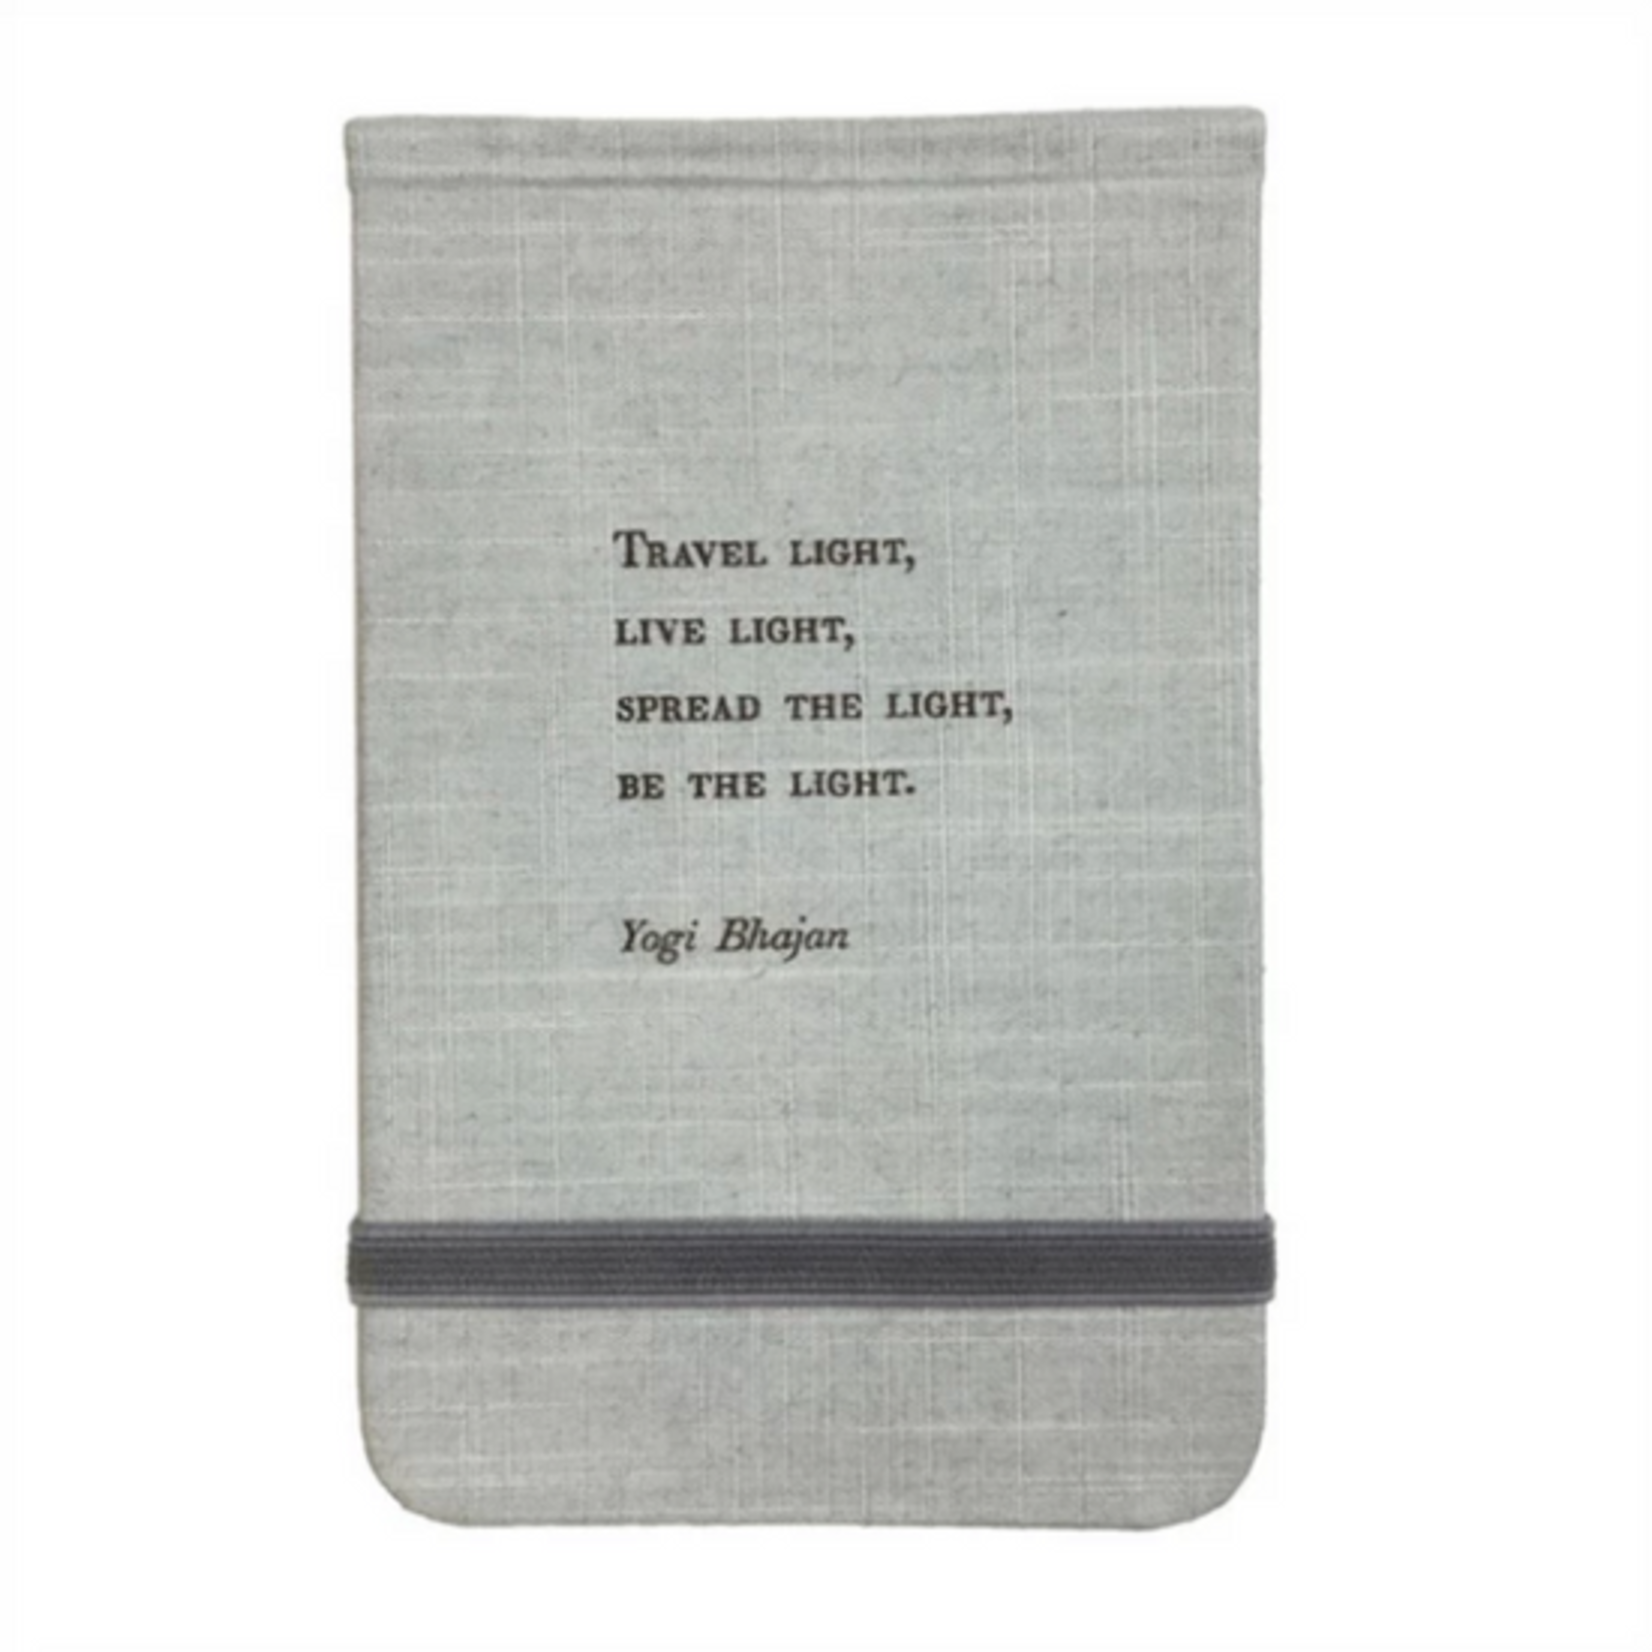 SugarBoo Petite Fabric Notebook